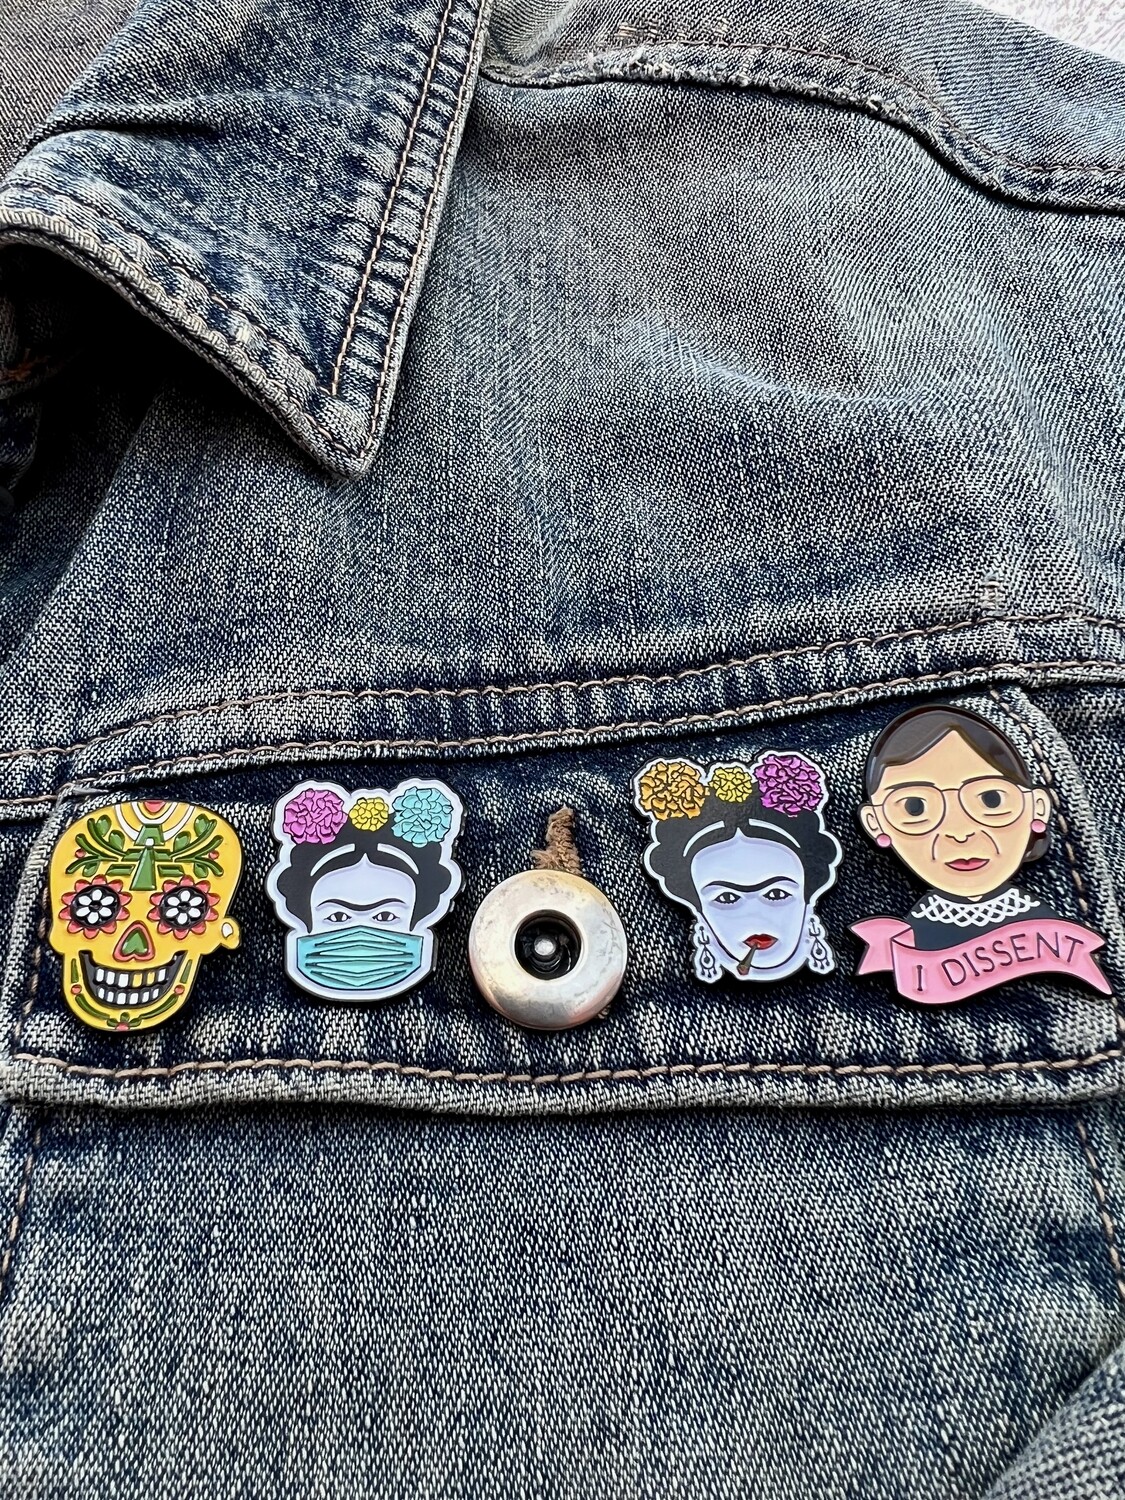 Metal enamel pin set of 4:  Calaca Mexican skull; Frida w/face mask; Frida smocking a blunt; and Justice Ruth Bader Ginsburg  I dissent, SCOTUS pin